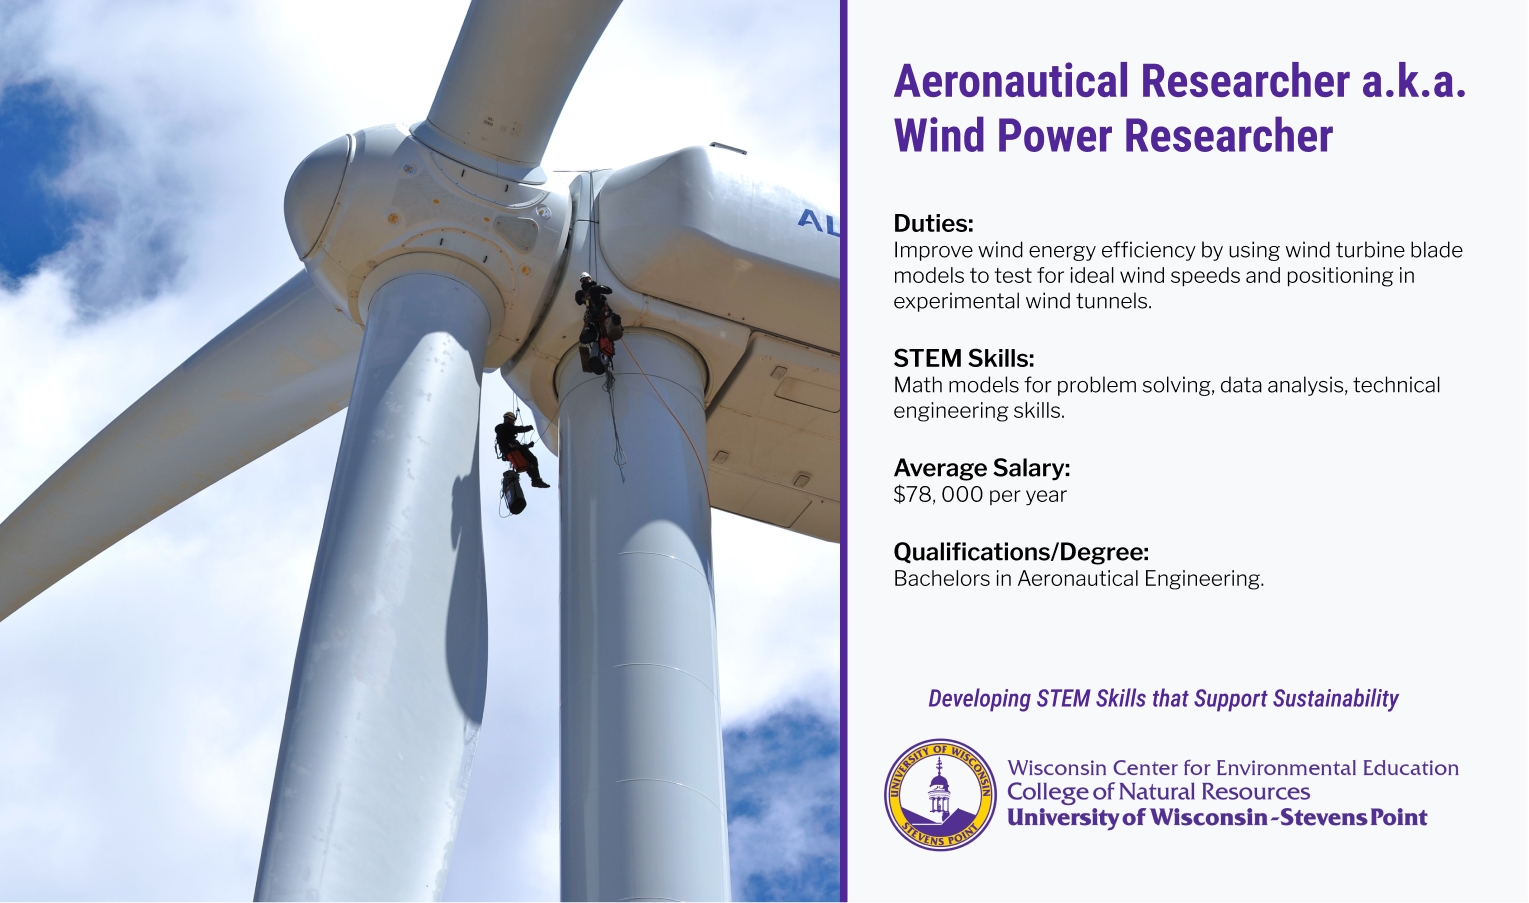 Aeronautical Researcher - Wind Power Researcher Job Description